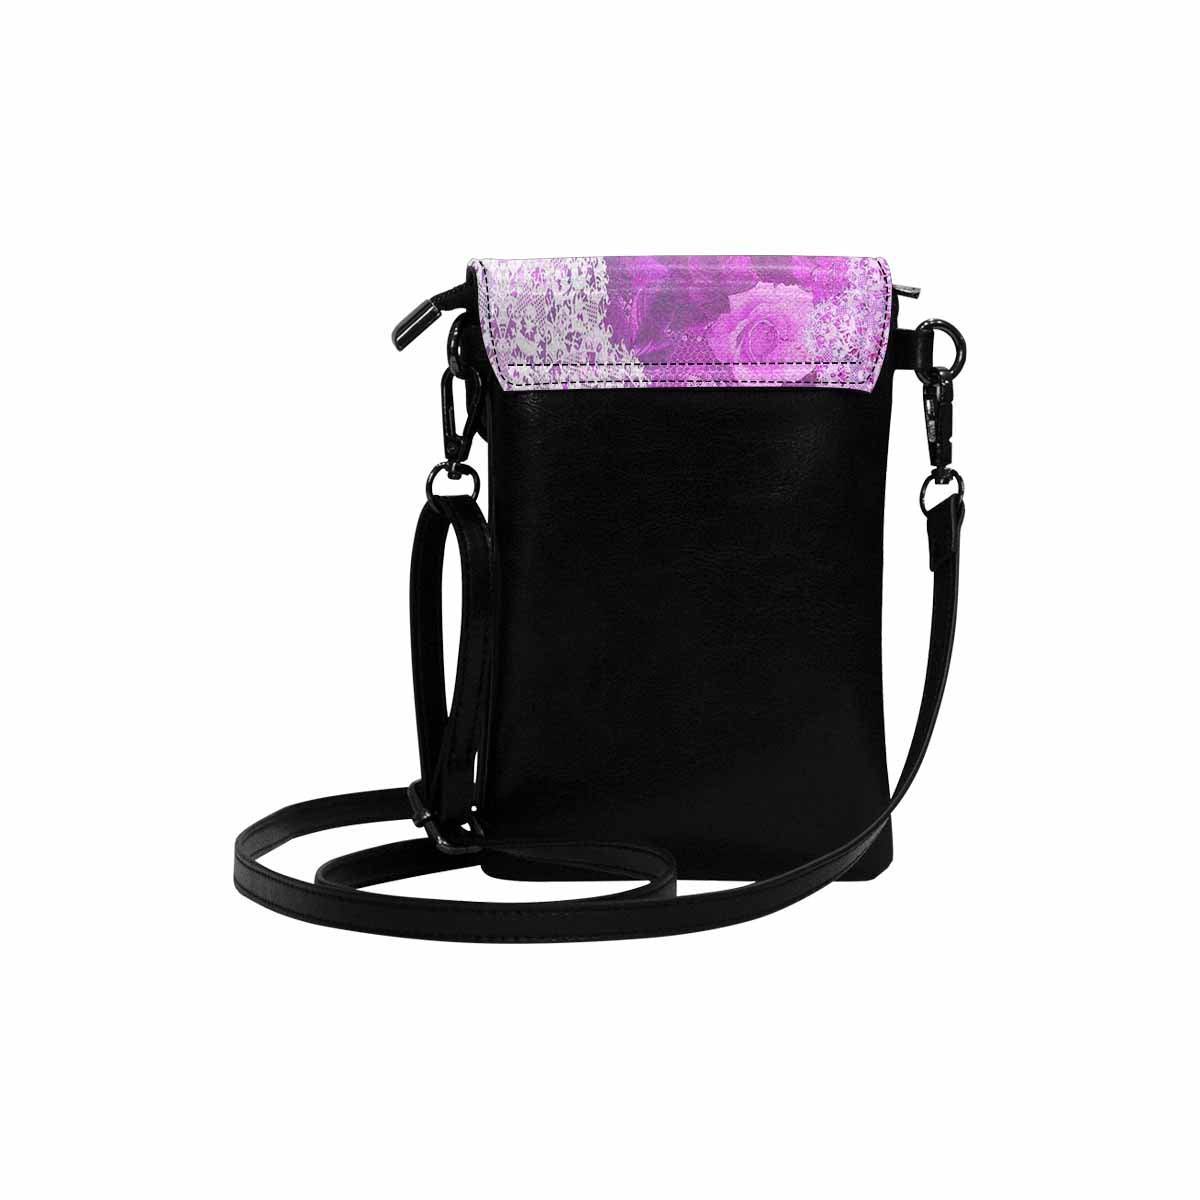 Victorian lace print cell phone purse, mobile purse, Design 03